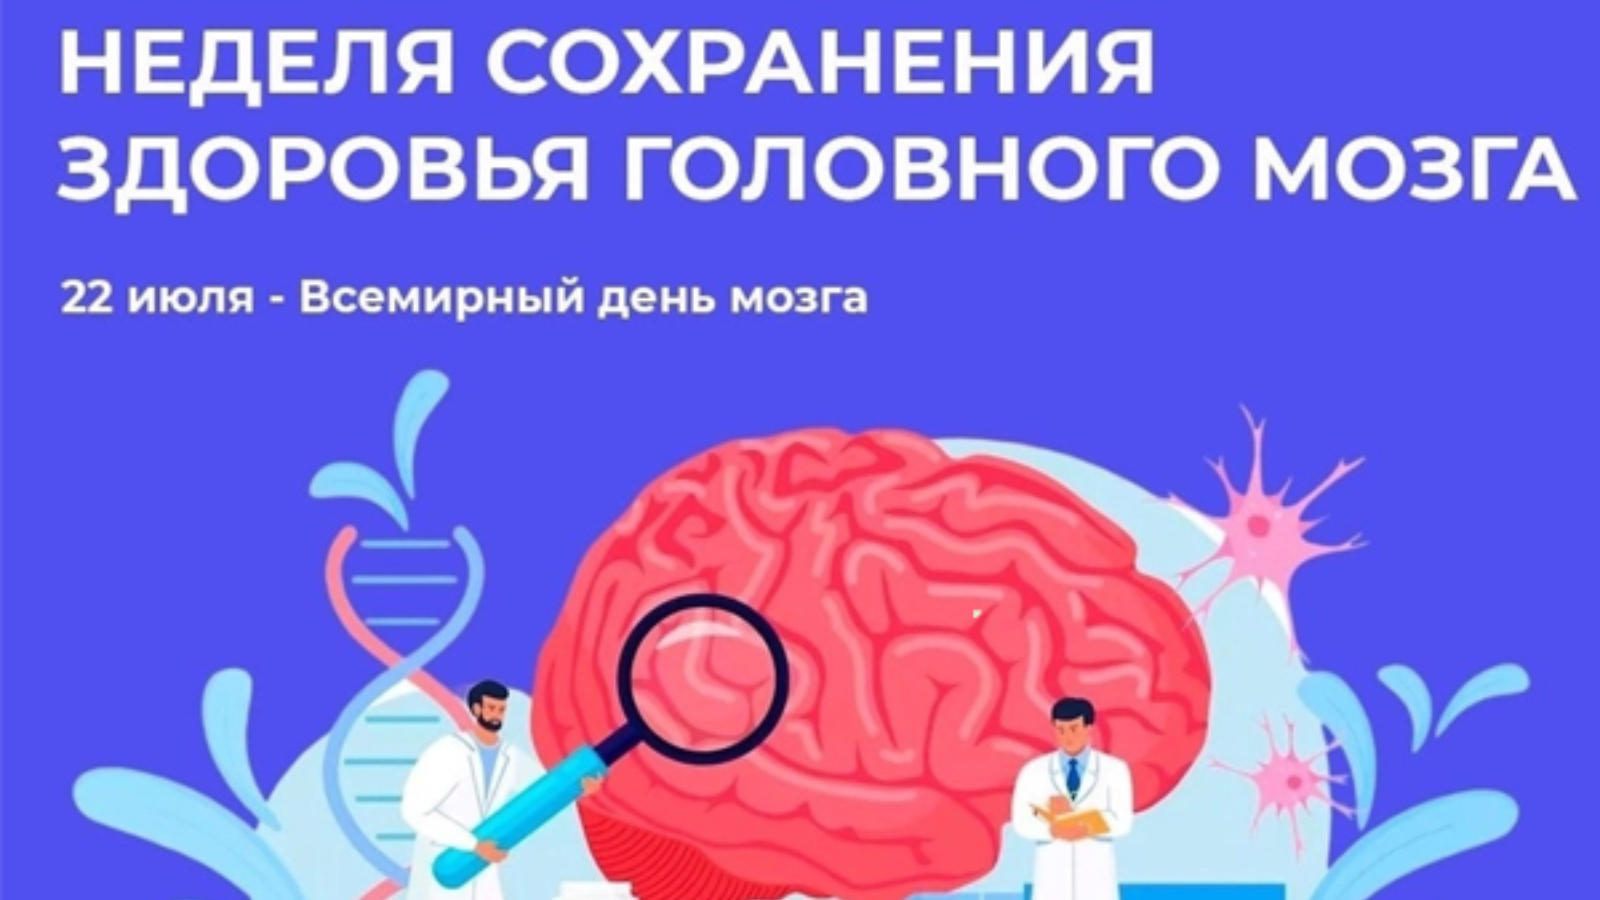 Brain 22